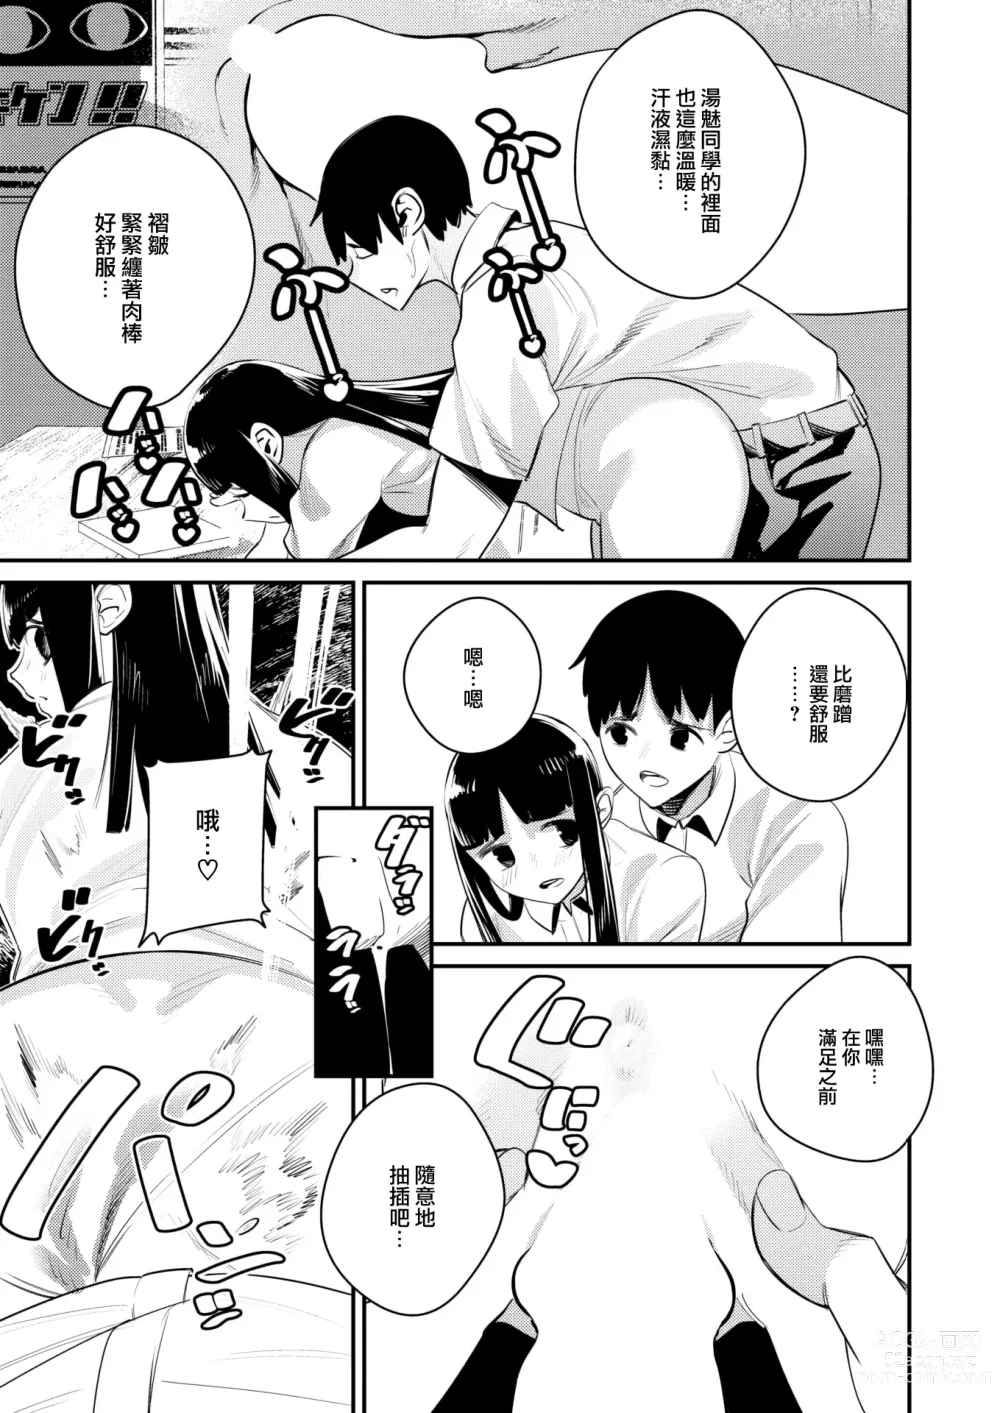 Page 20 of manga Kaijin Netsuai Mokushiroku